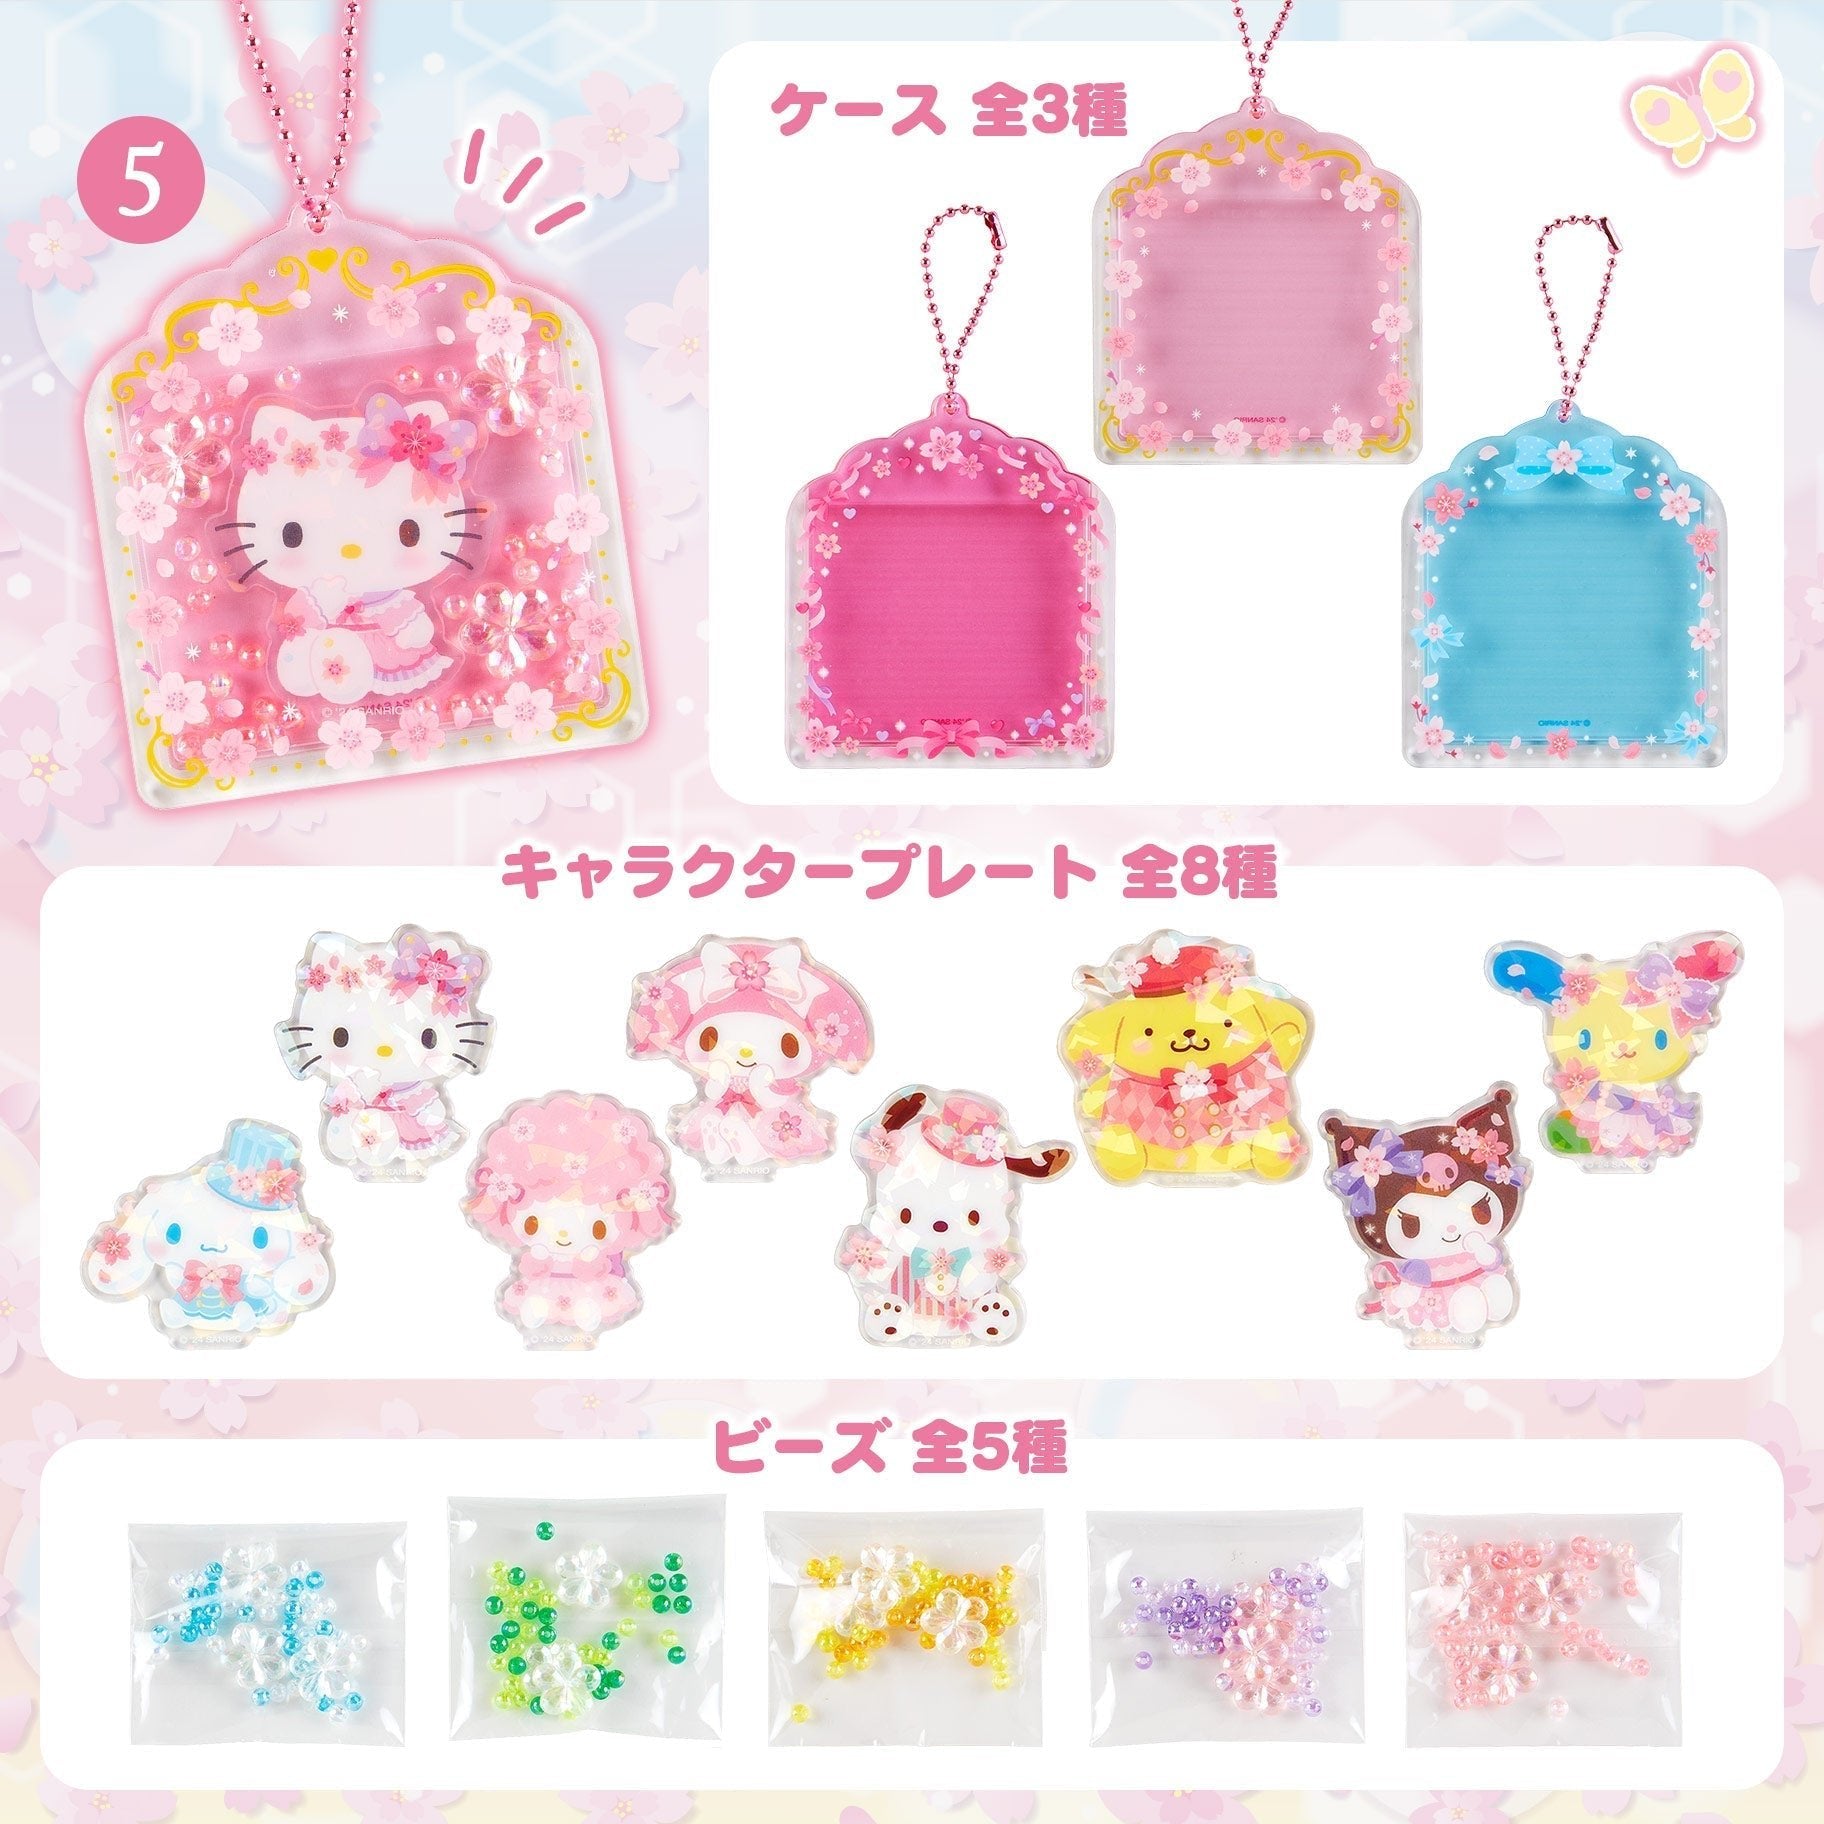 *CUSTOMIZABLE* "Sanrio Cherry Blossom" Keychain Set - Rosey’s Kawaii Shop